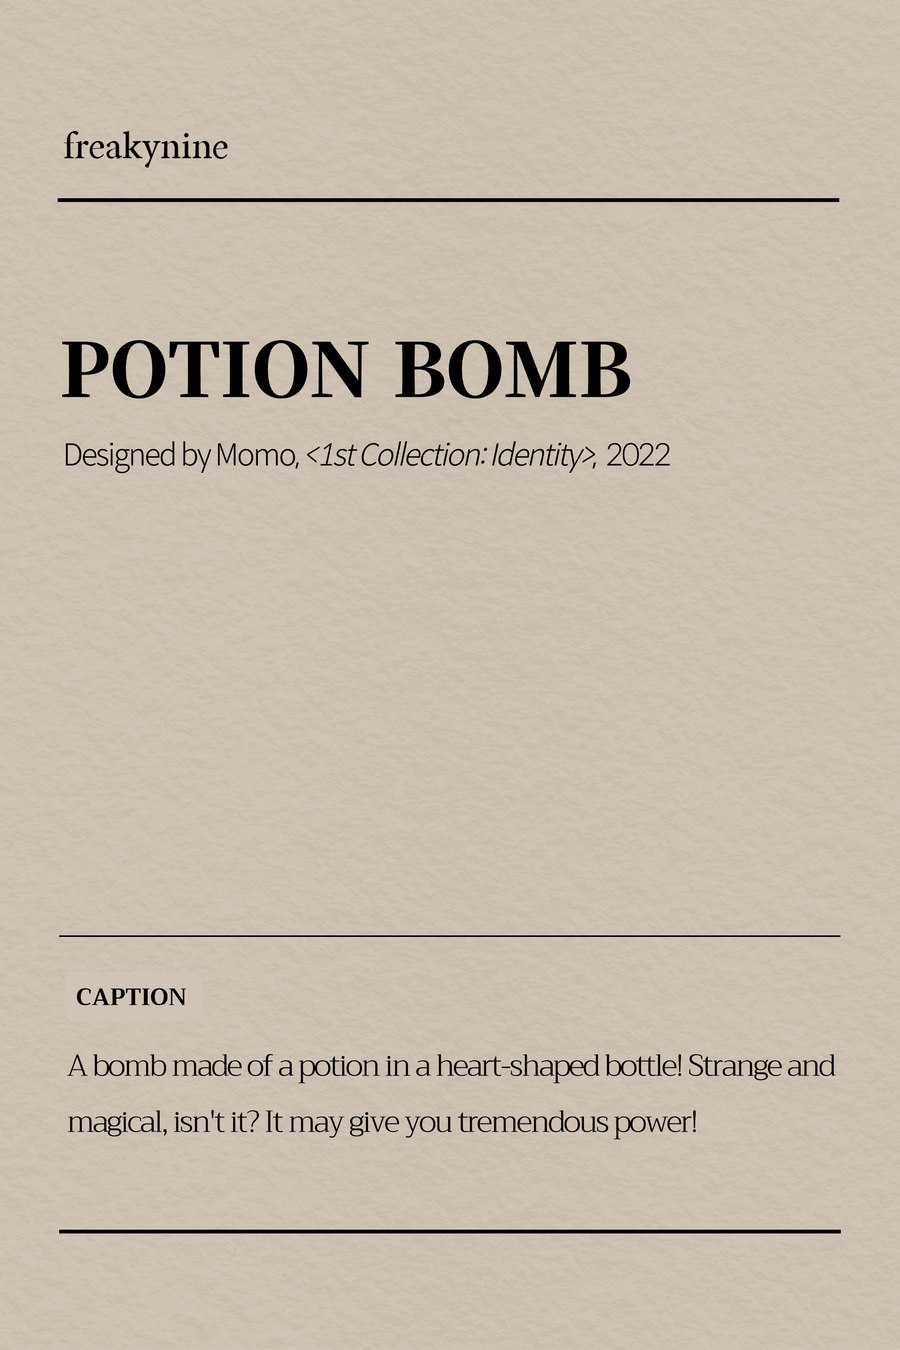 (Momo) POTION BOMB (2EA) - freakynine